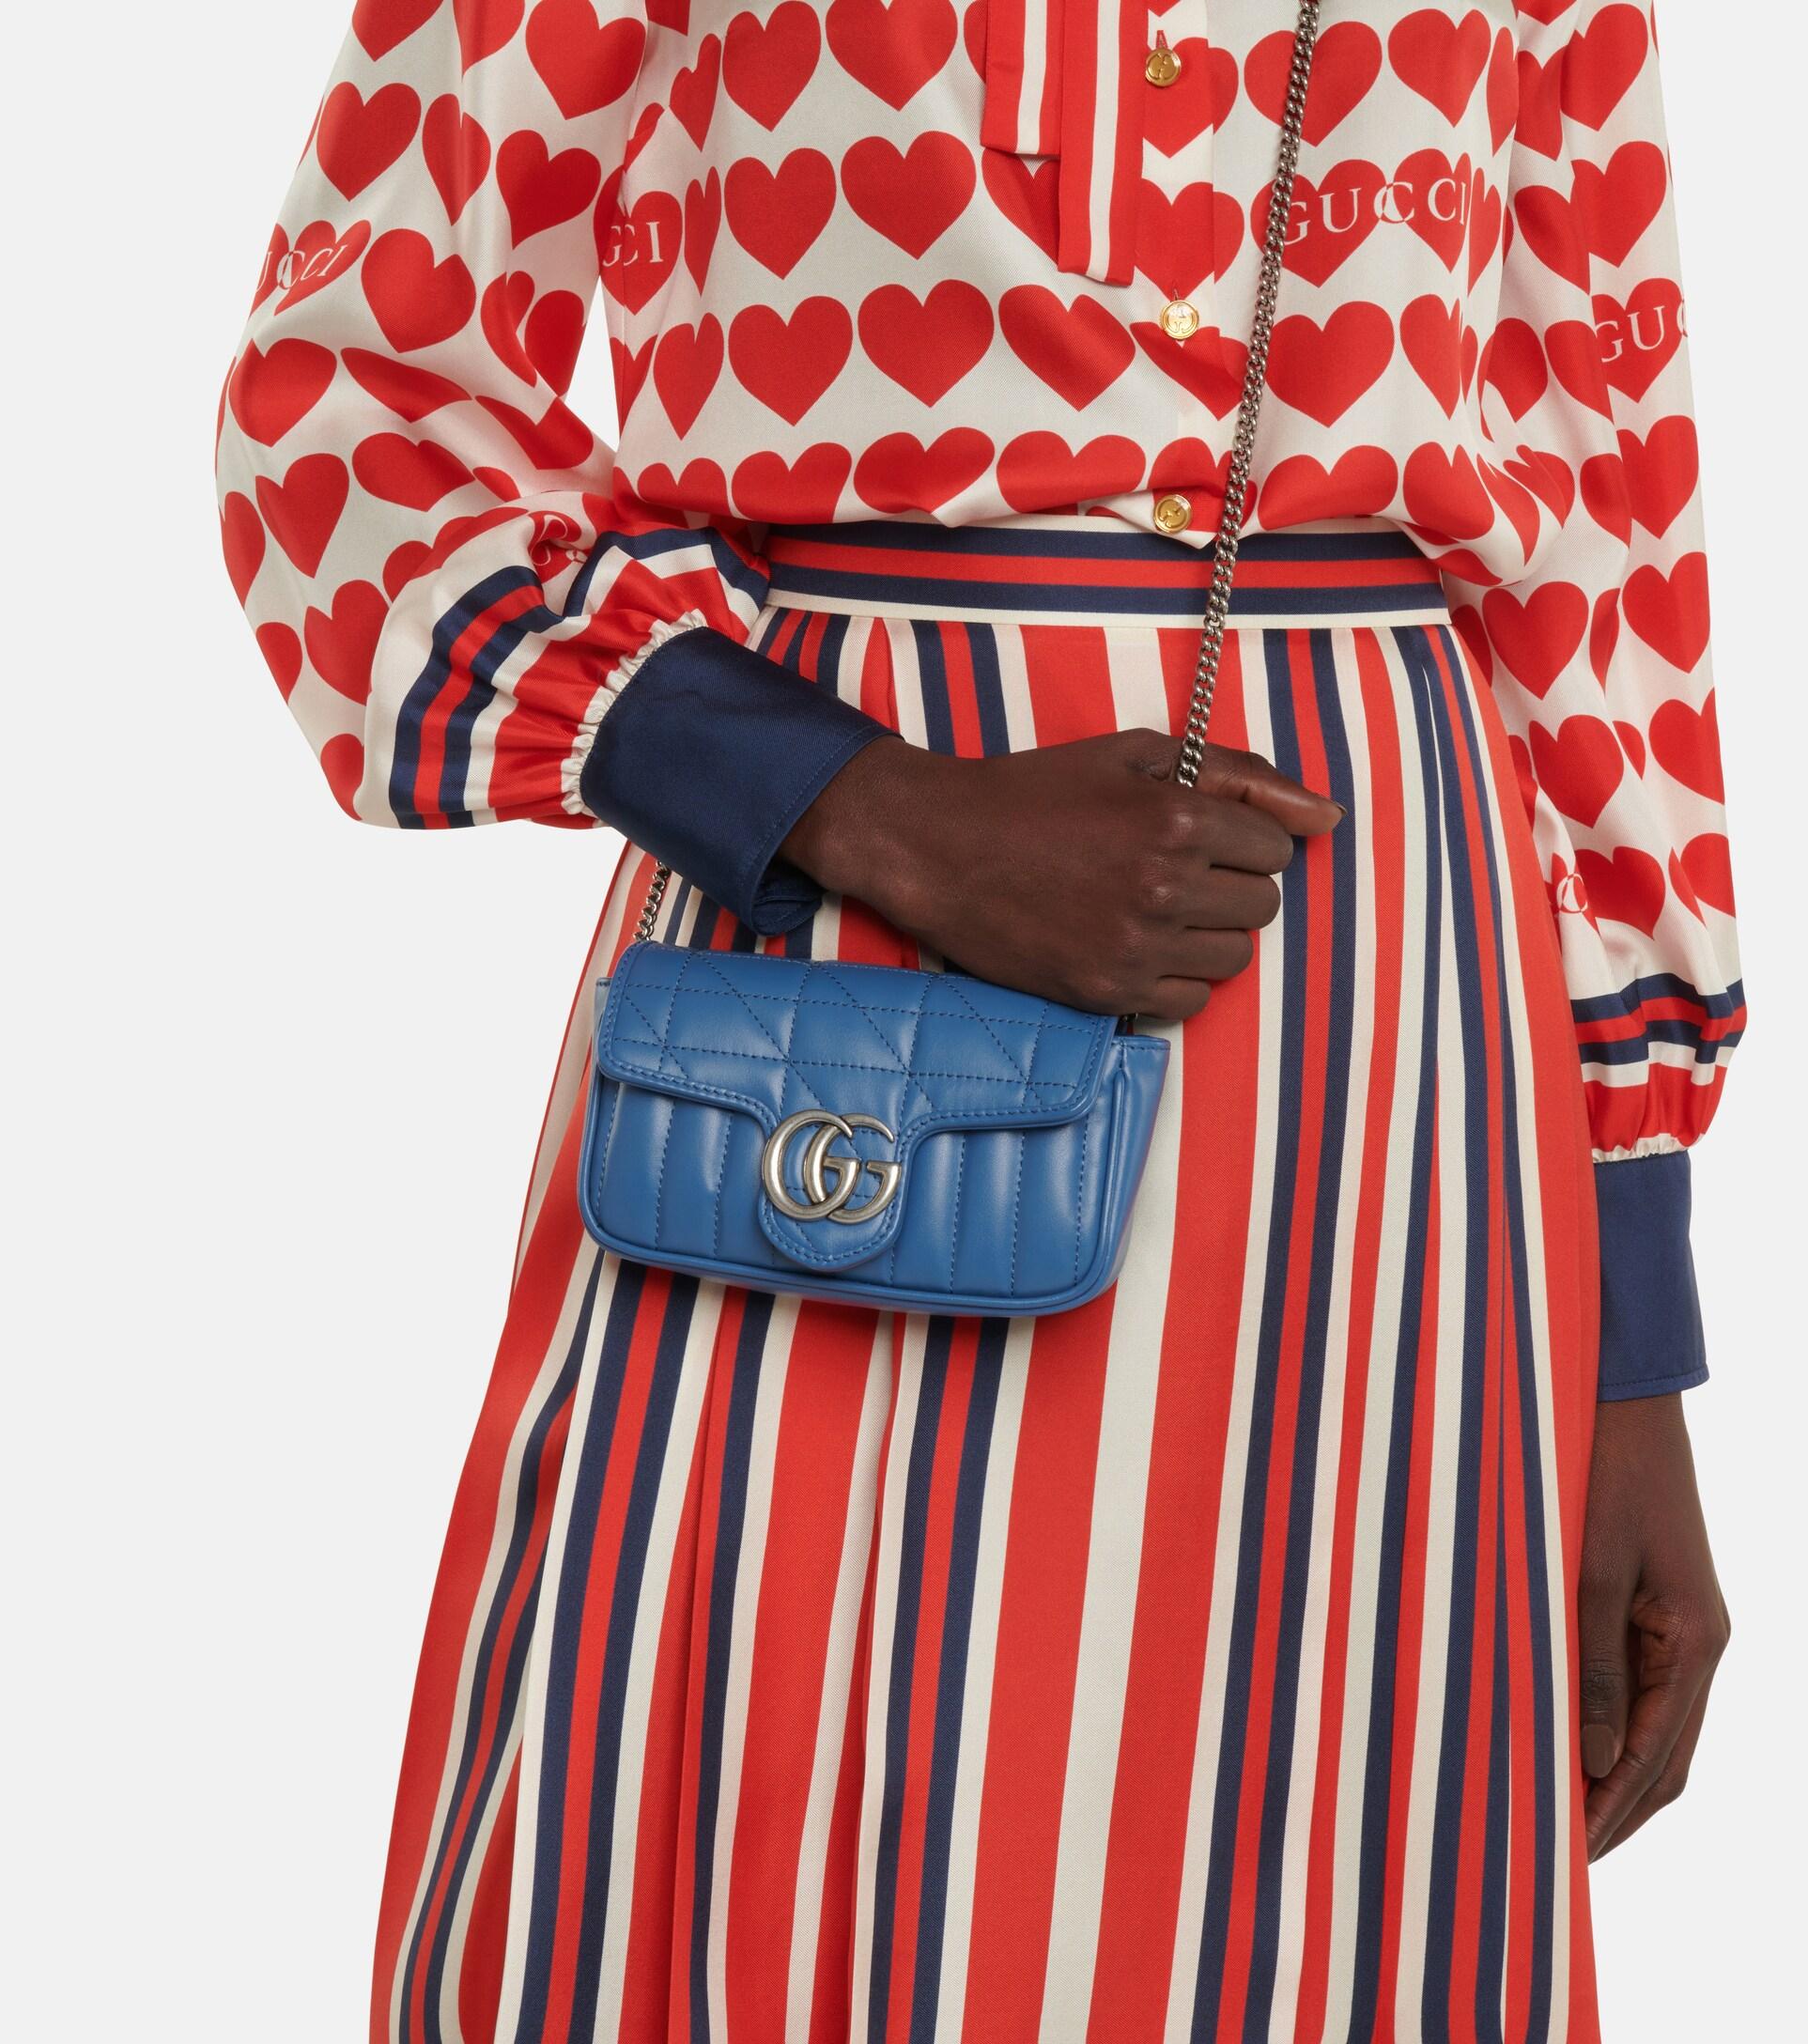 Gucci GG Marmont Super Mini Shoulder Bag in Blue